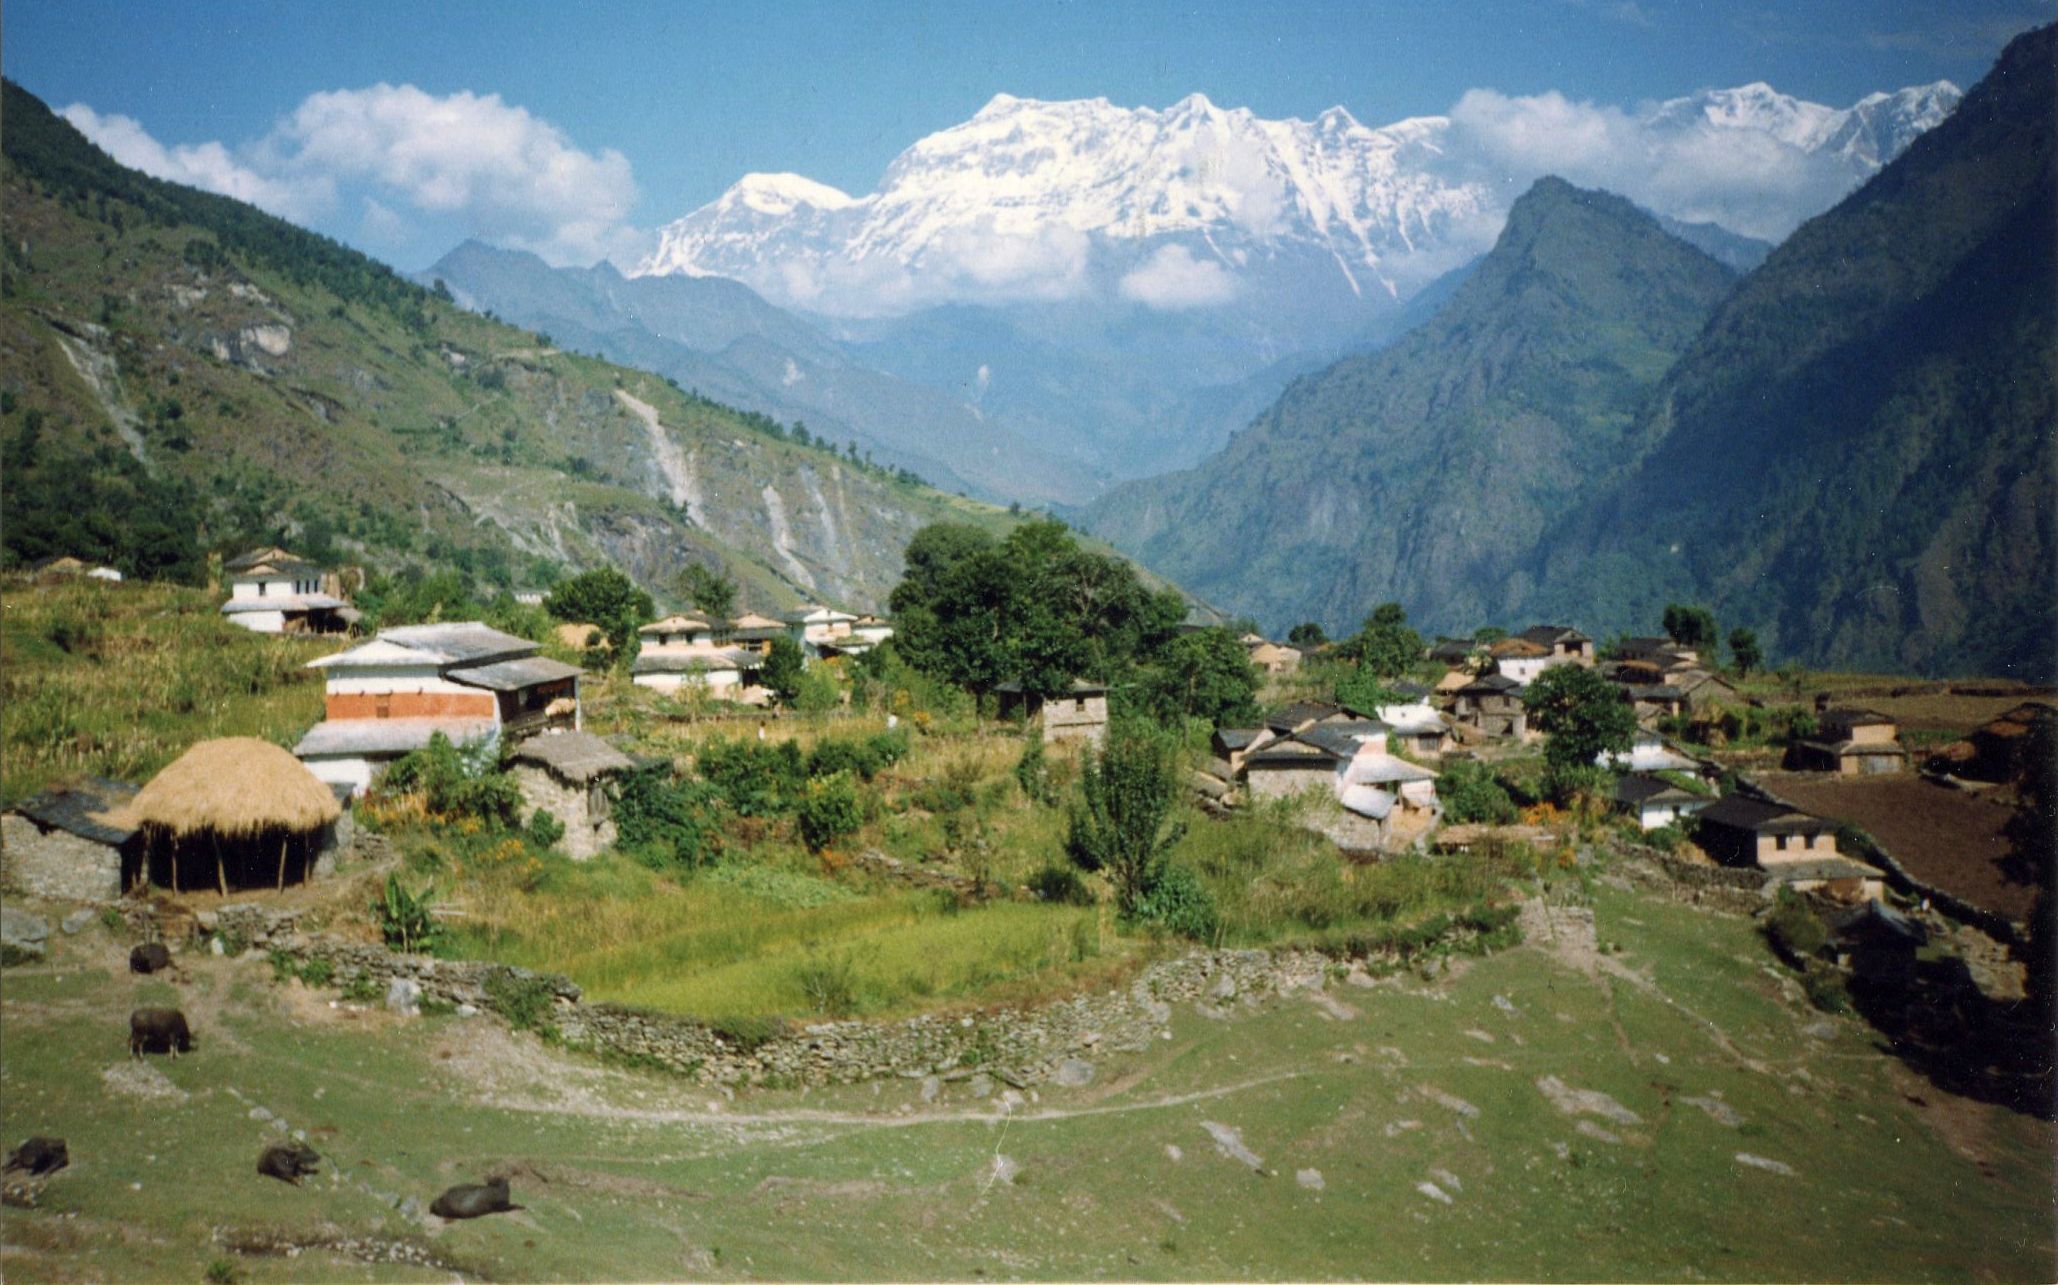 Darapani Village and the Gurja Himal in the Dhaulagiri Region